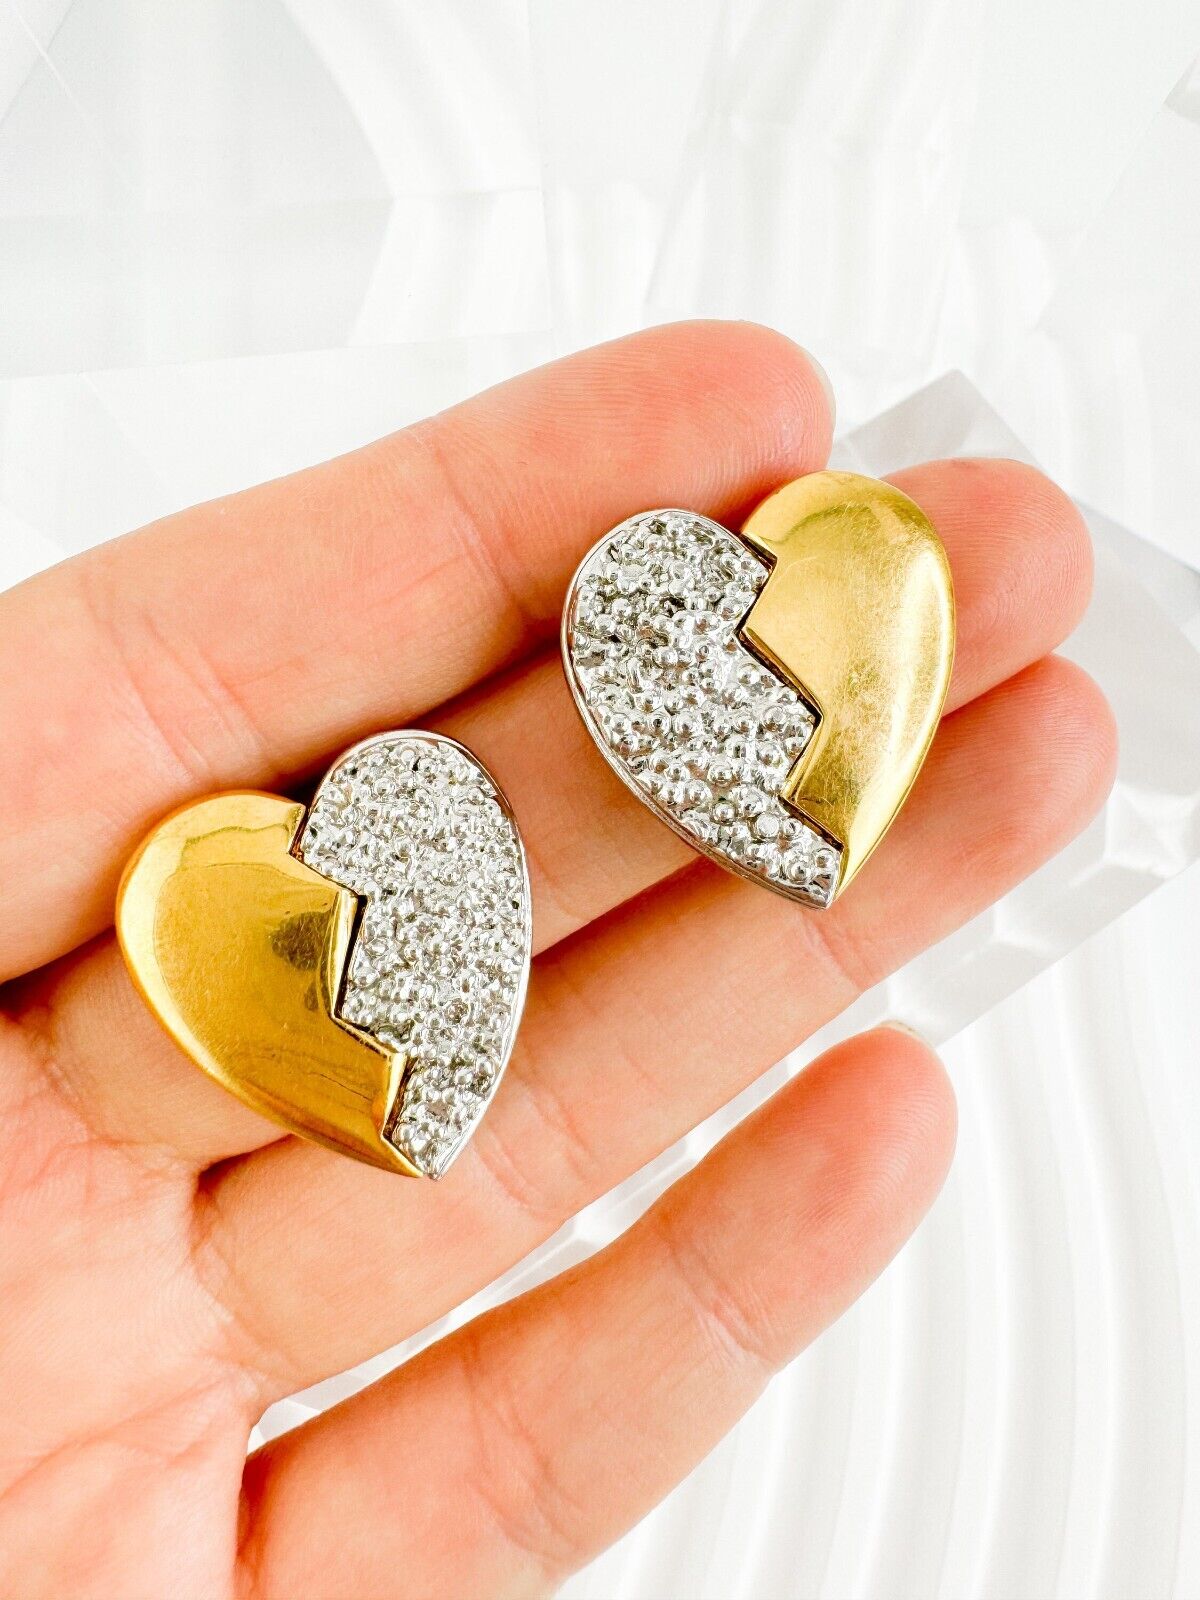 YSL Yves Saint Laurent Earrings Broken Heart, Beautiful Gold & Silver Broken Heart Earrings, Swarovski Crystals, Vintage Earrings Gold